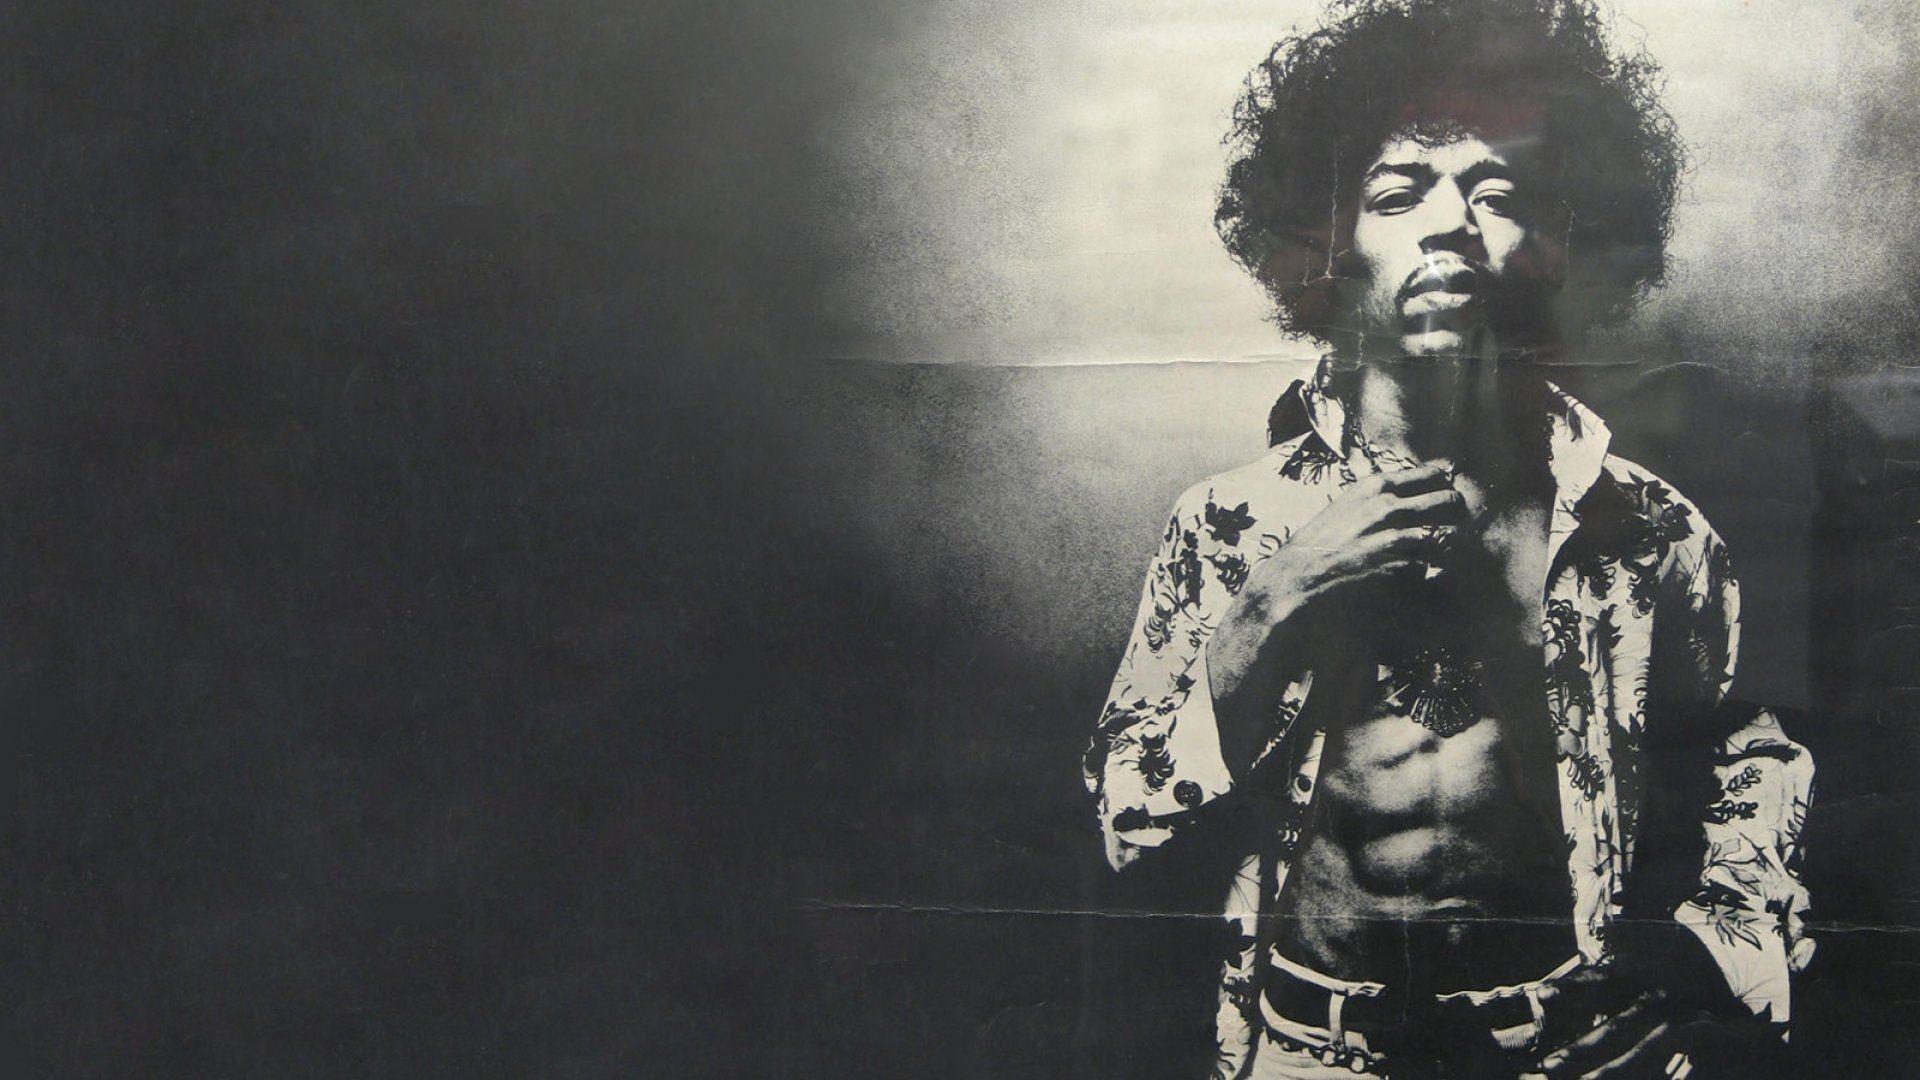 Jimi Hendrix Wallpaper Lovely 50 Unique Jimi Hendrix Birthday Hd4